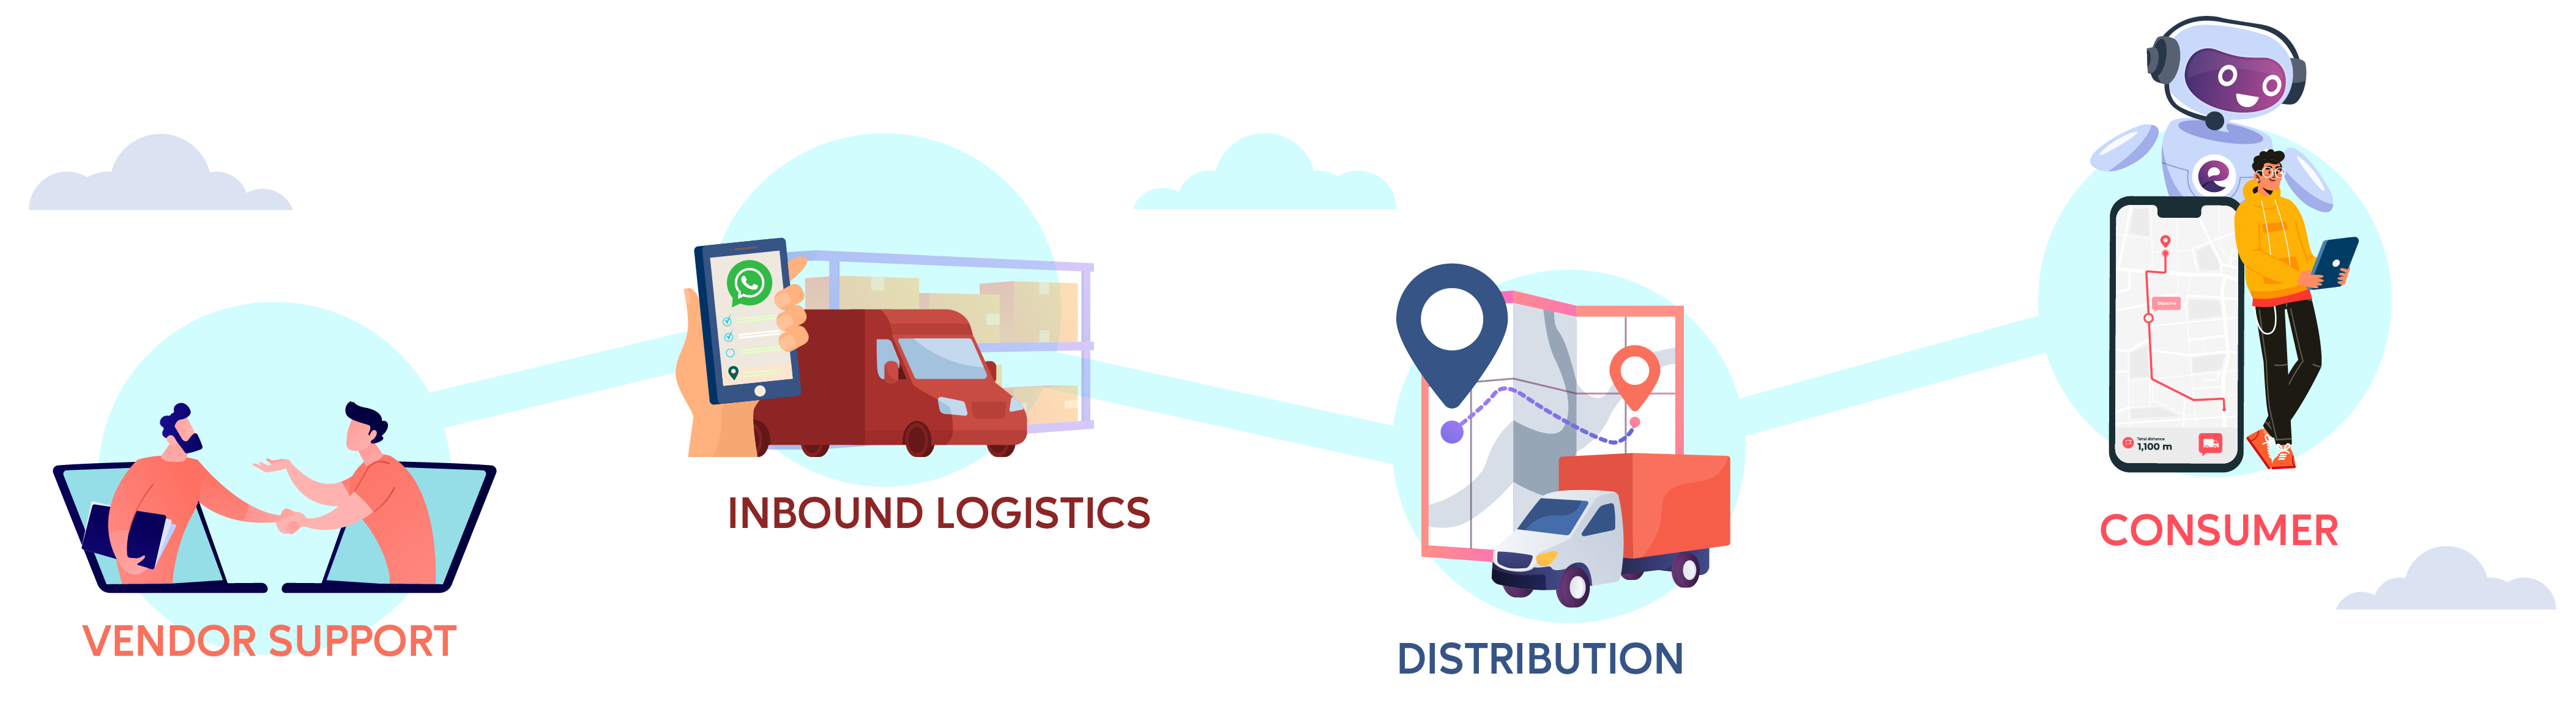 "logistic customer journey"